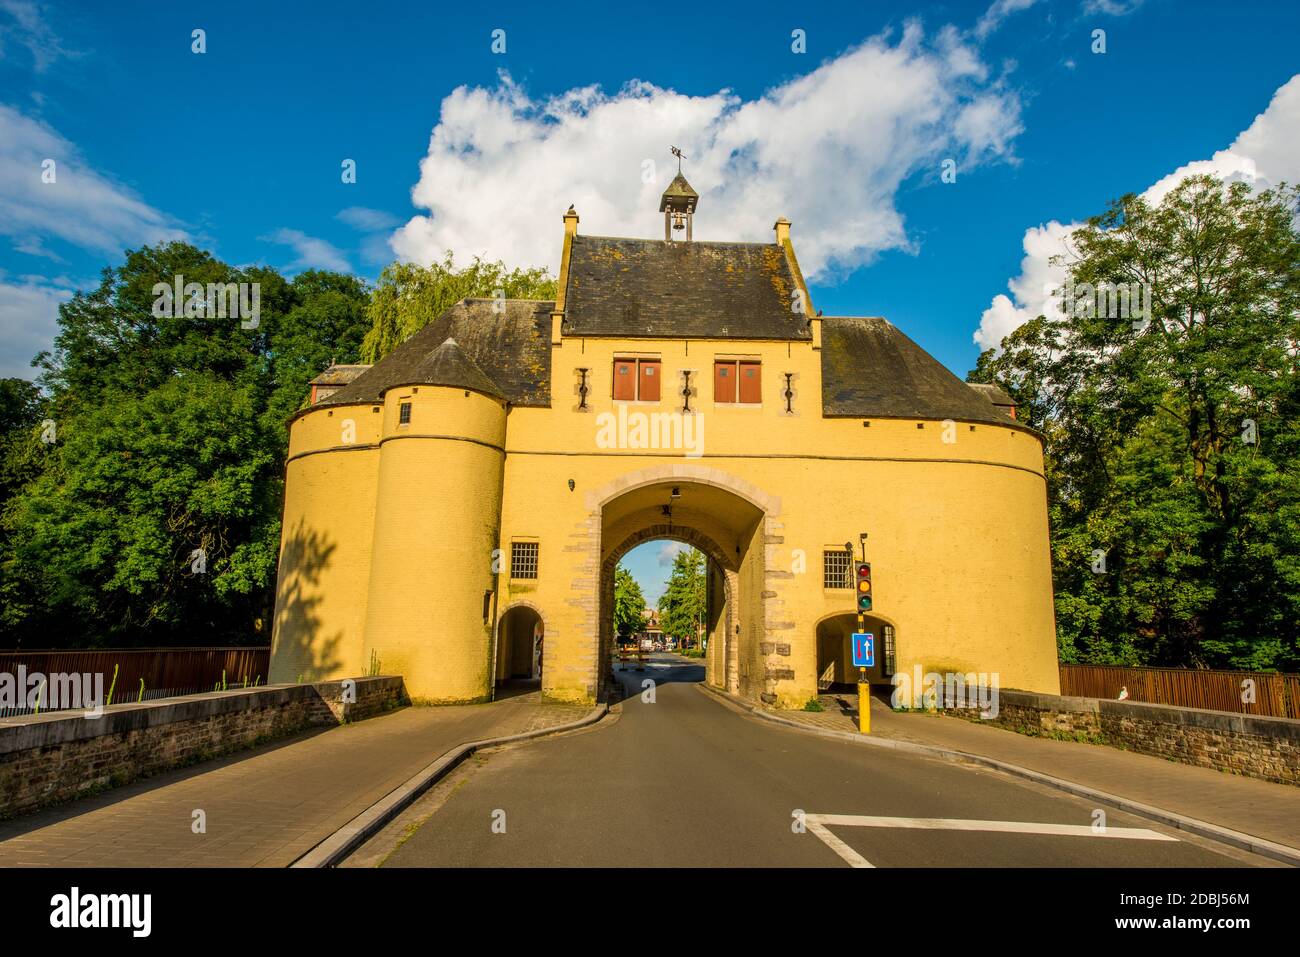 Ezelpoort (Donkey's Gate), befestigtes Tor, Brügge, Westflandern, Belgien, Europa Stockfoto